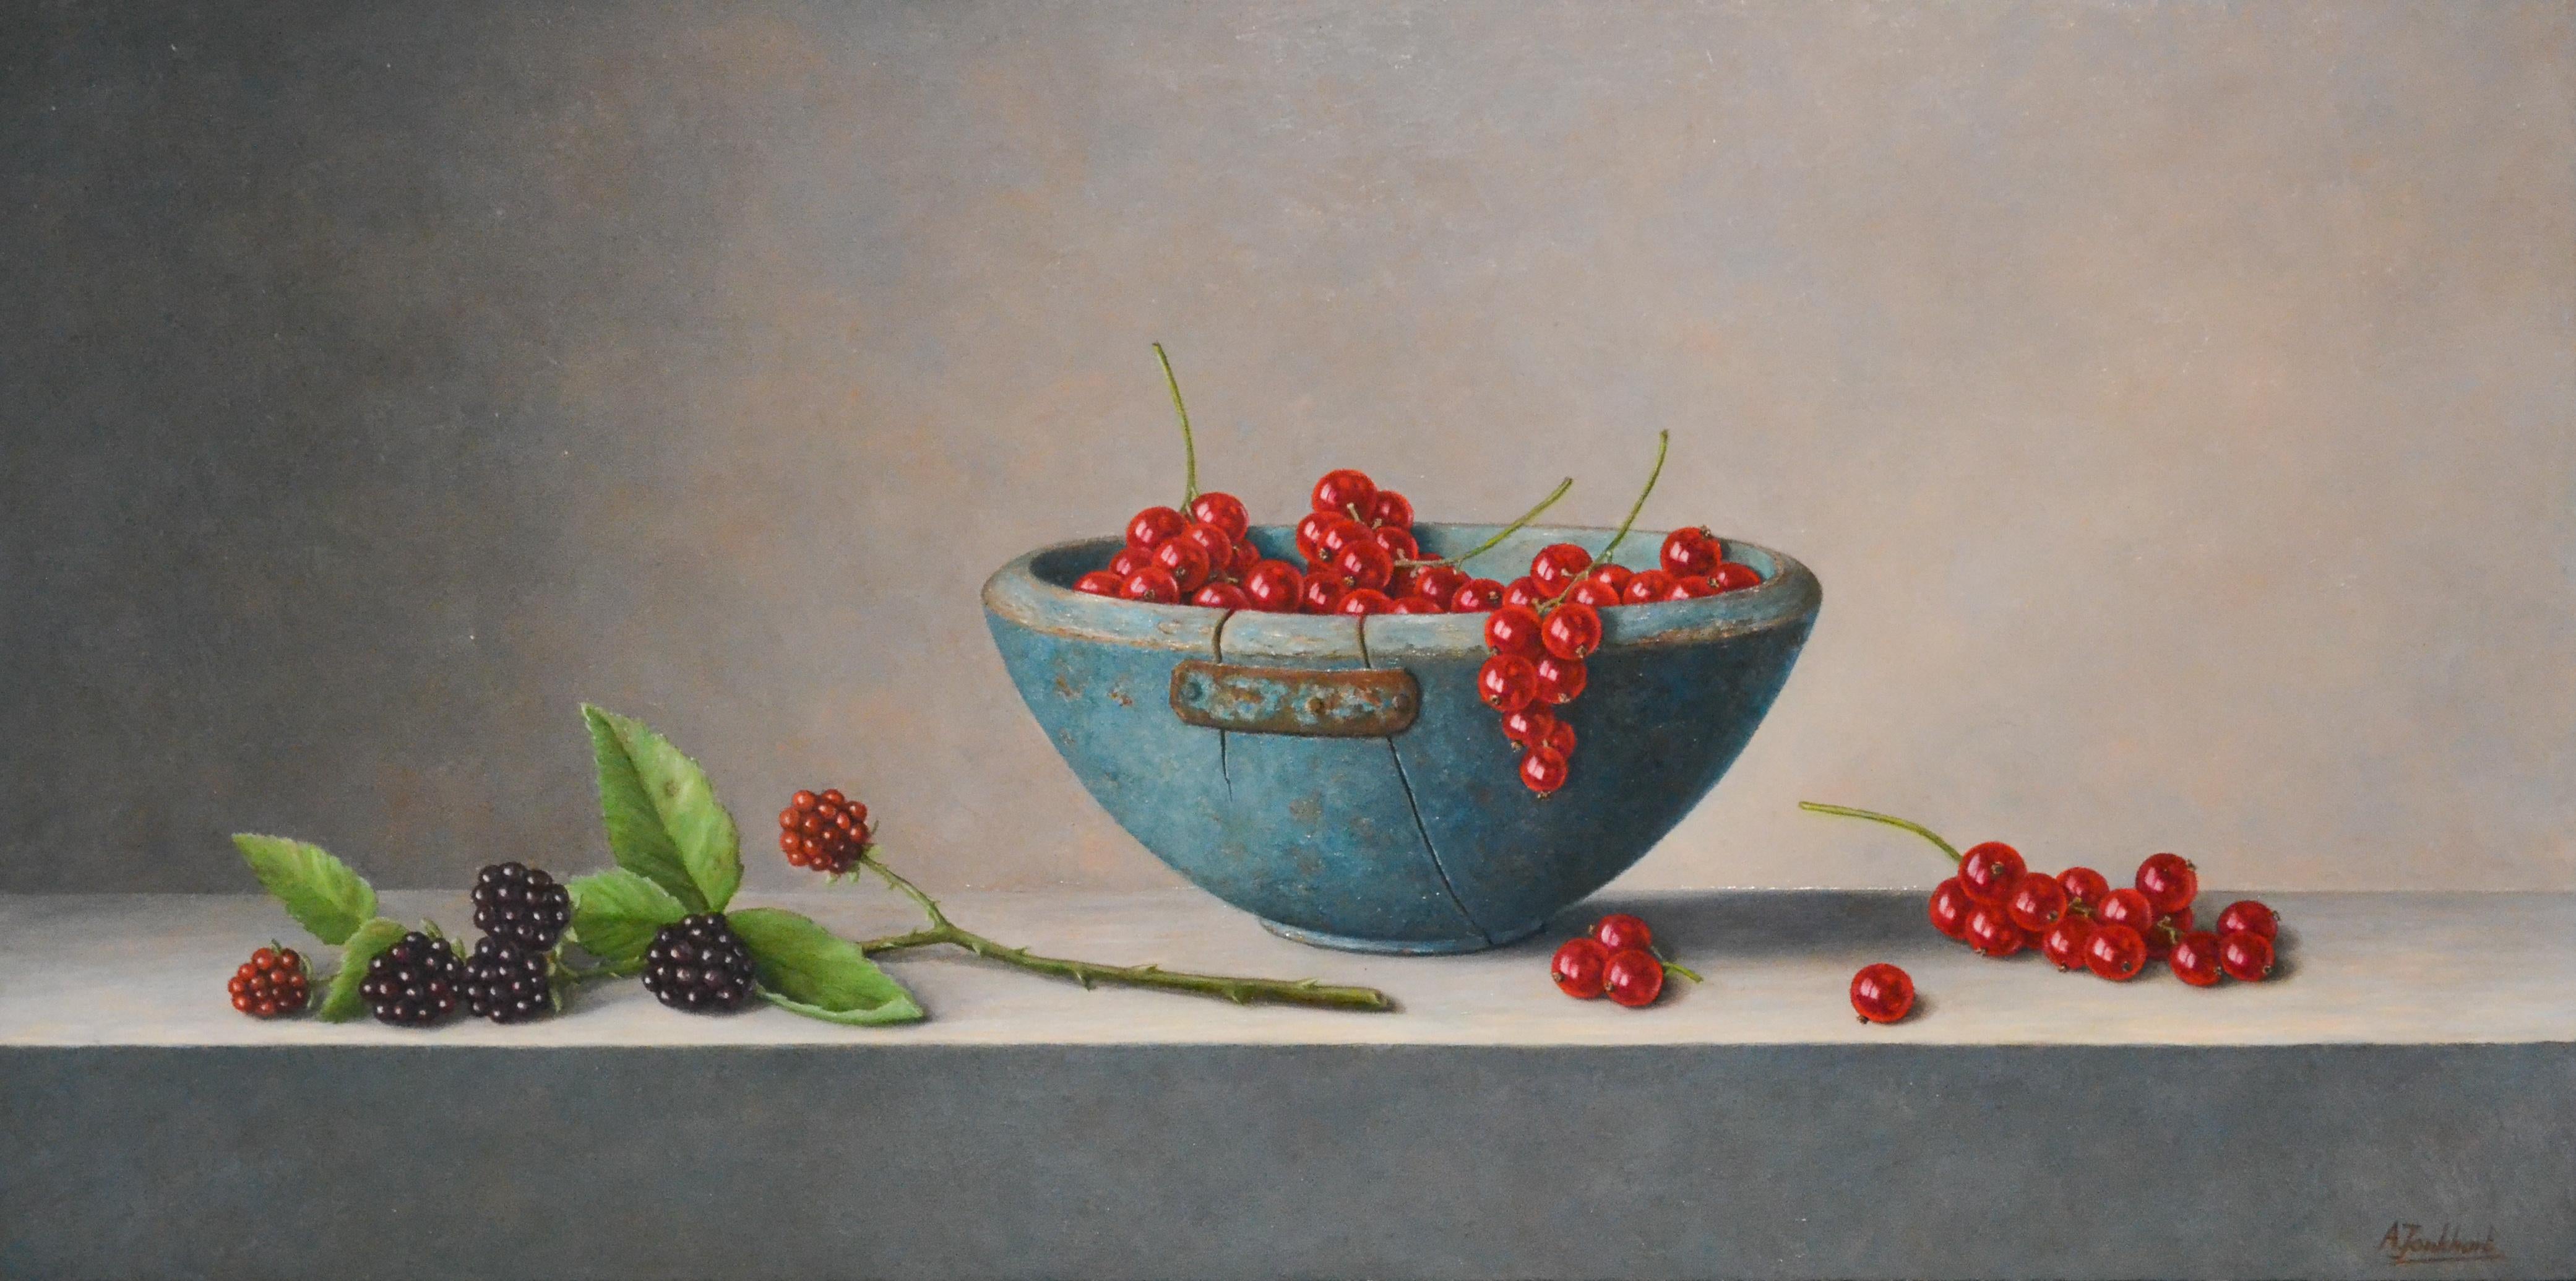 Annelies Jonkhart Figurative Painting - Blackberries& Berries -21st Century contemporary still-life painting A. Jonkhart